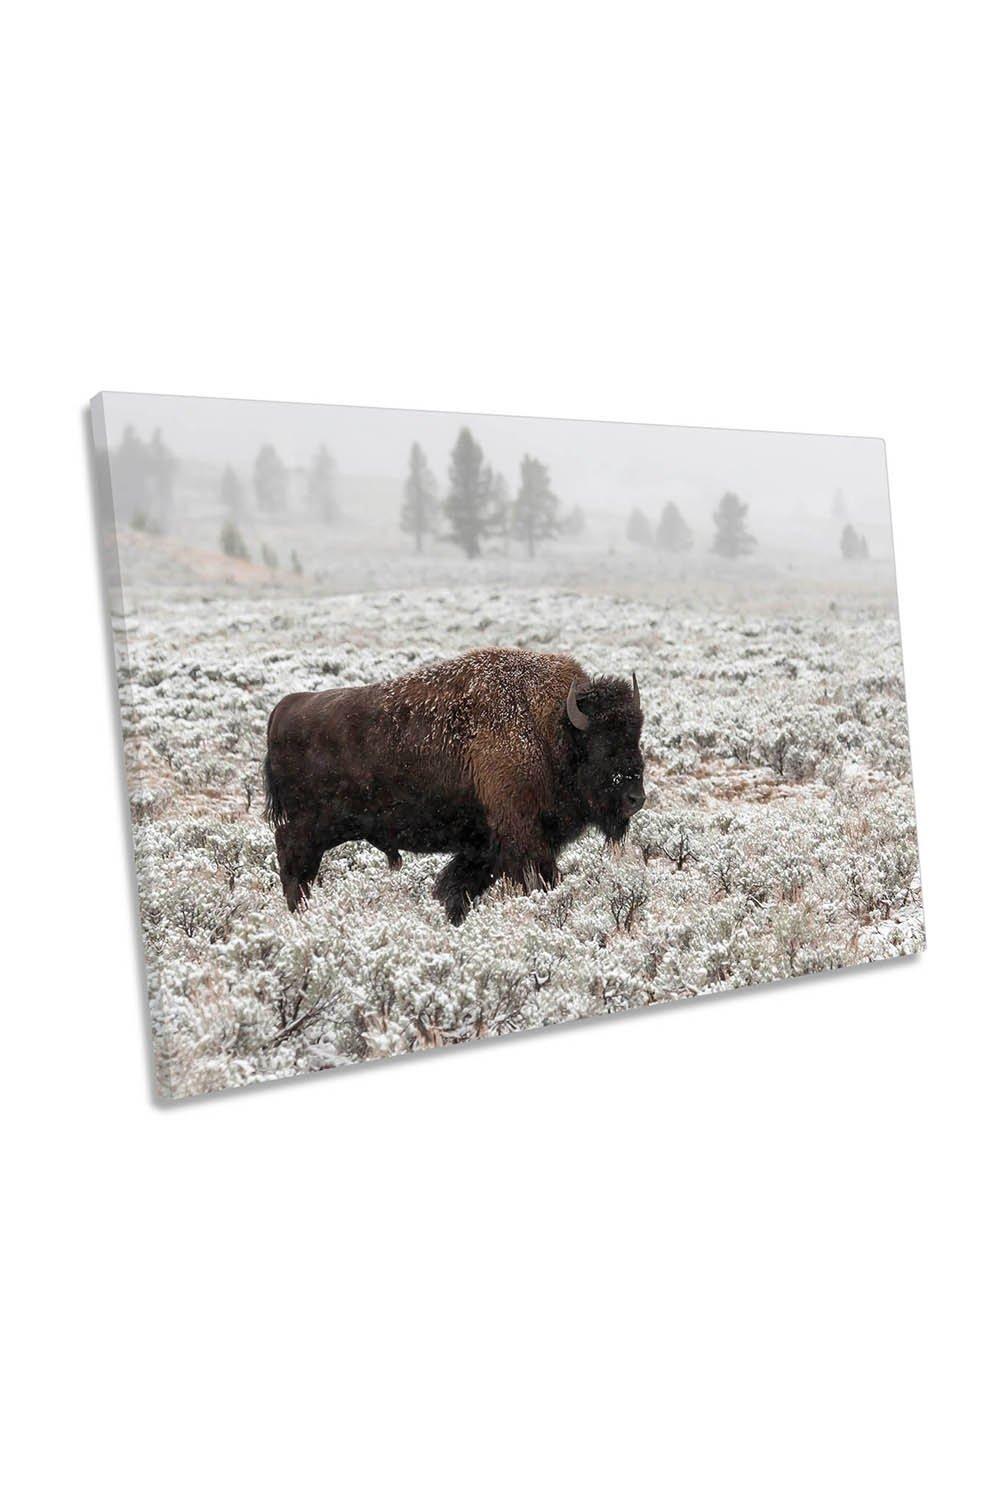 Bison Buffalo Wildlife Winter Landscape Canvas Wall Art Picture Print